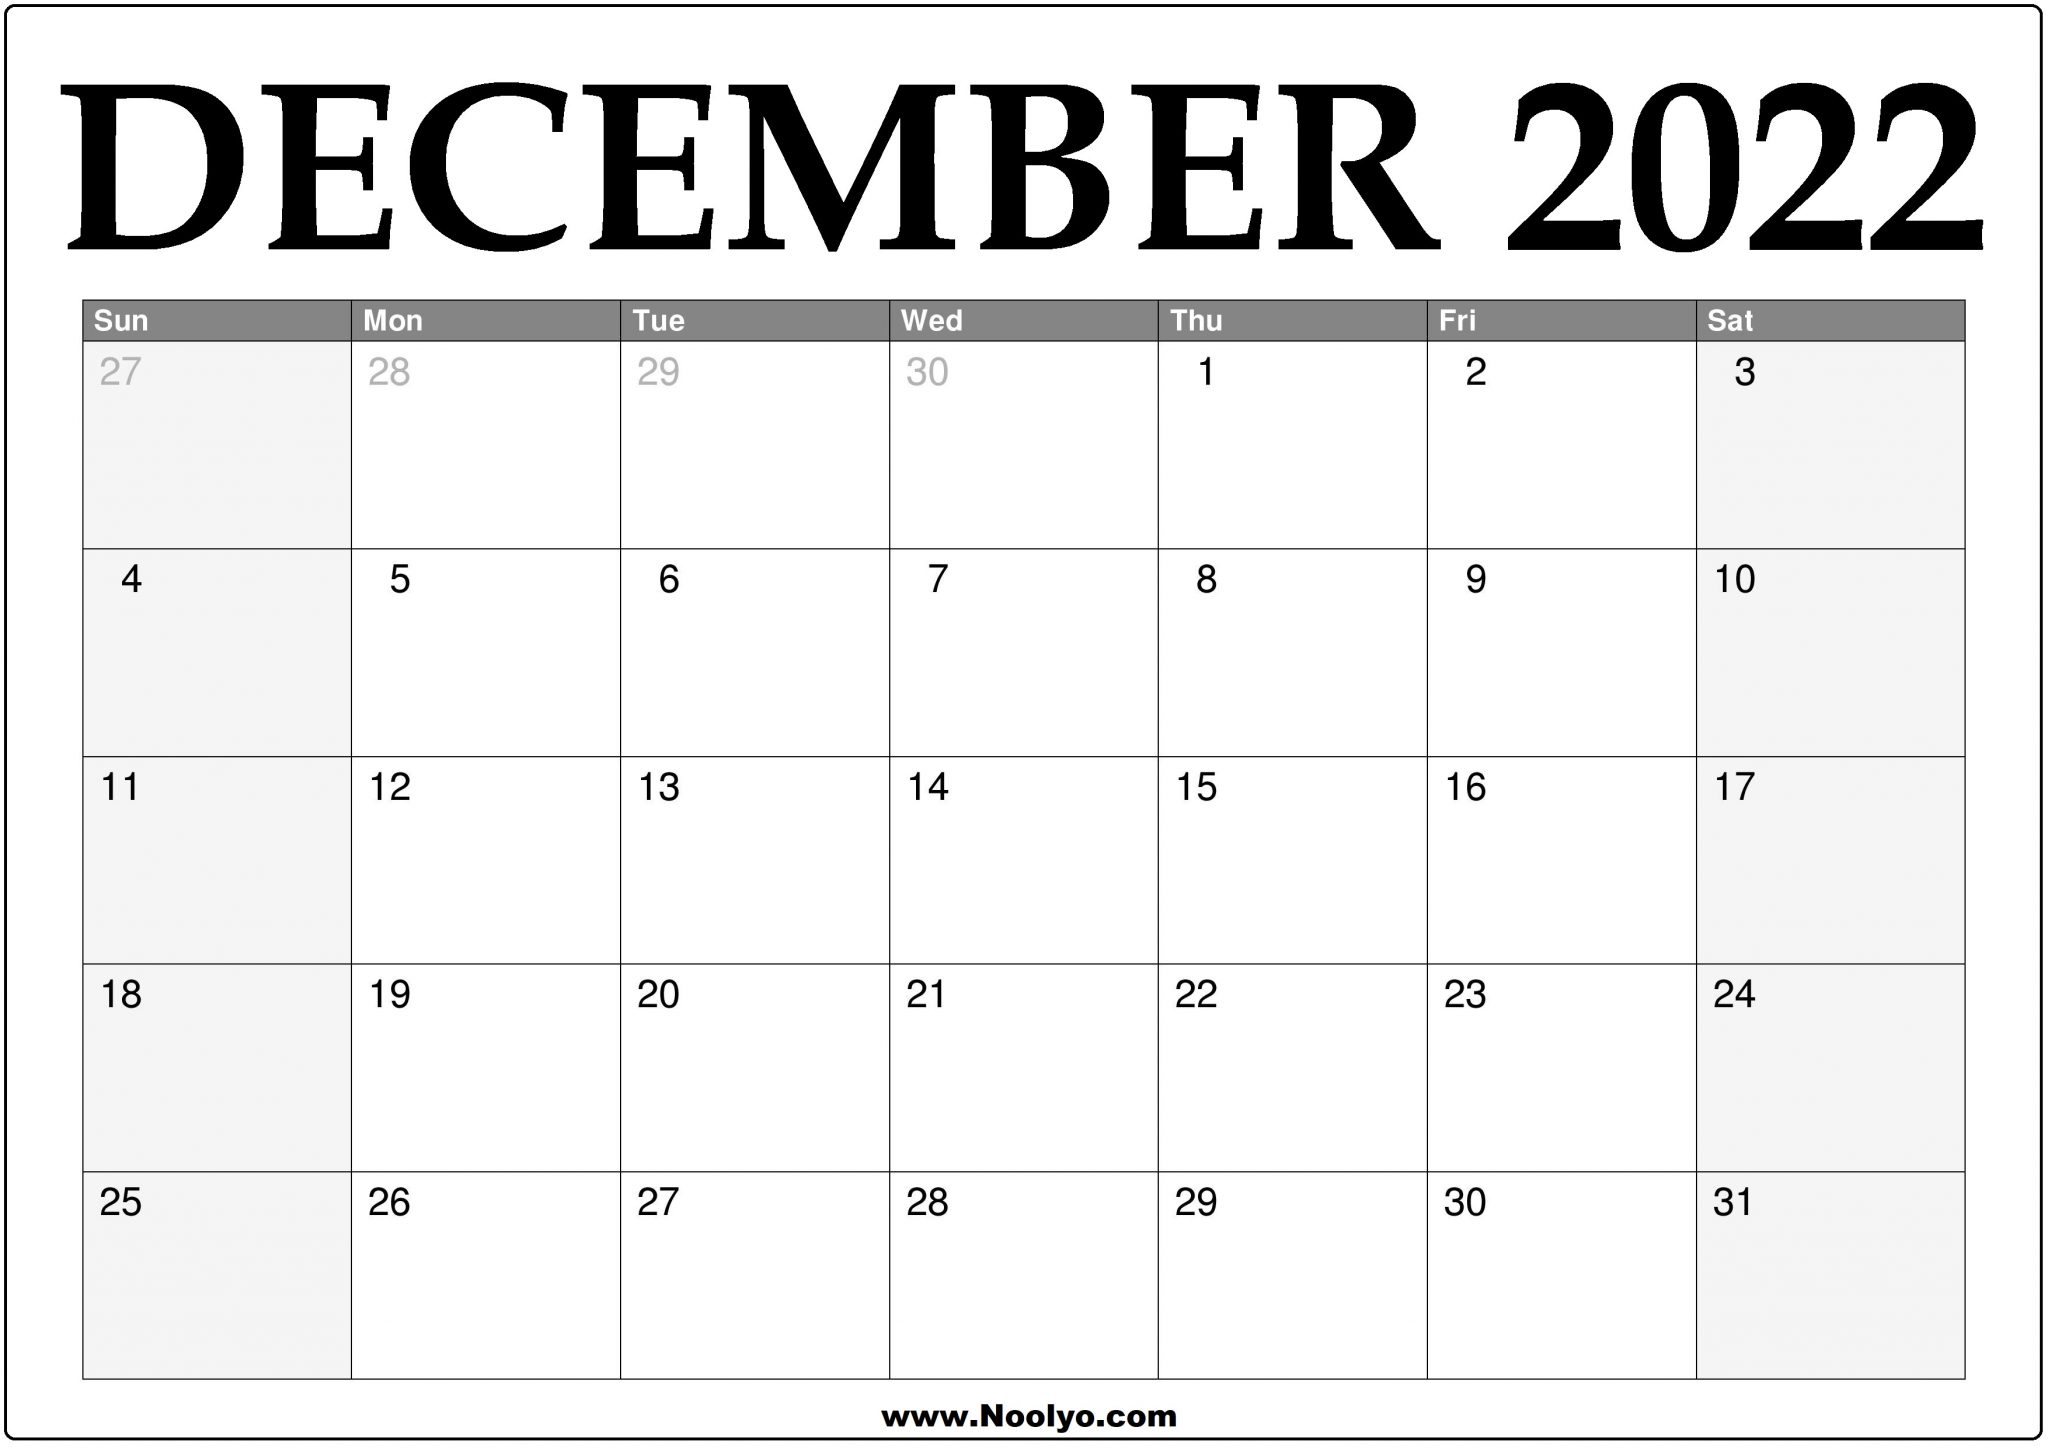 2022-december-calendar-printable-download-free-noolyo